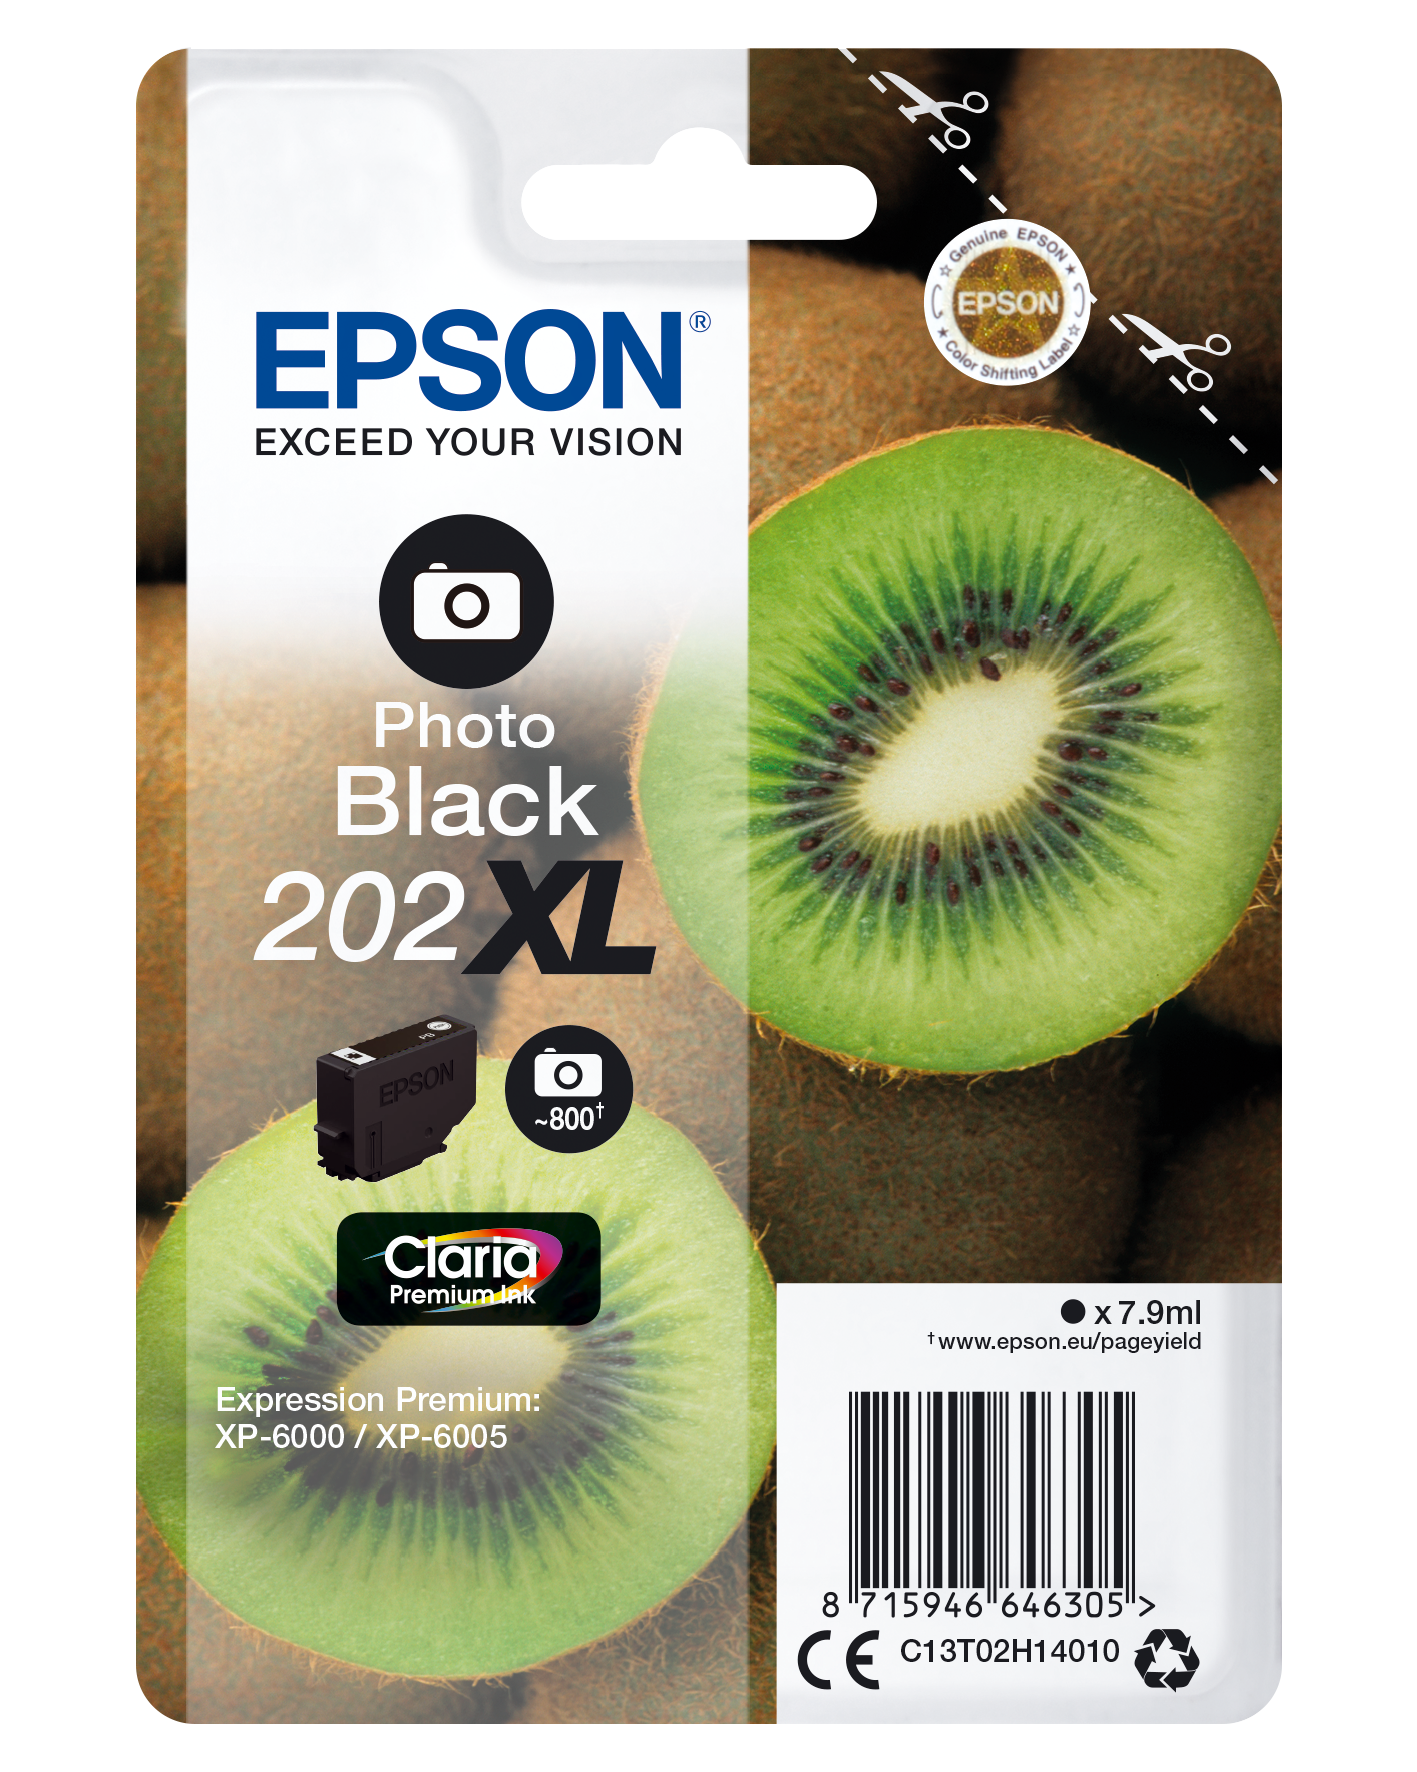 Epson Expression Premium XP-6105 Printer Ink Cartridges